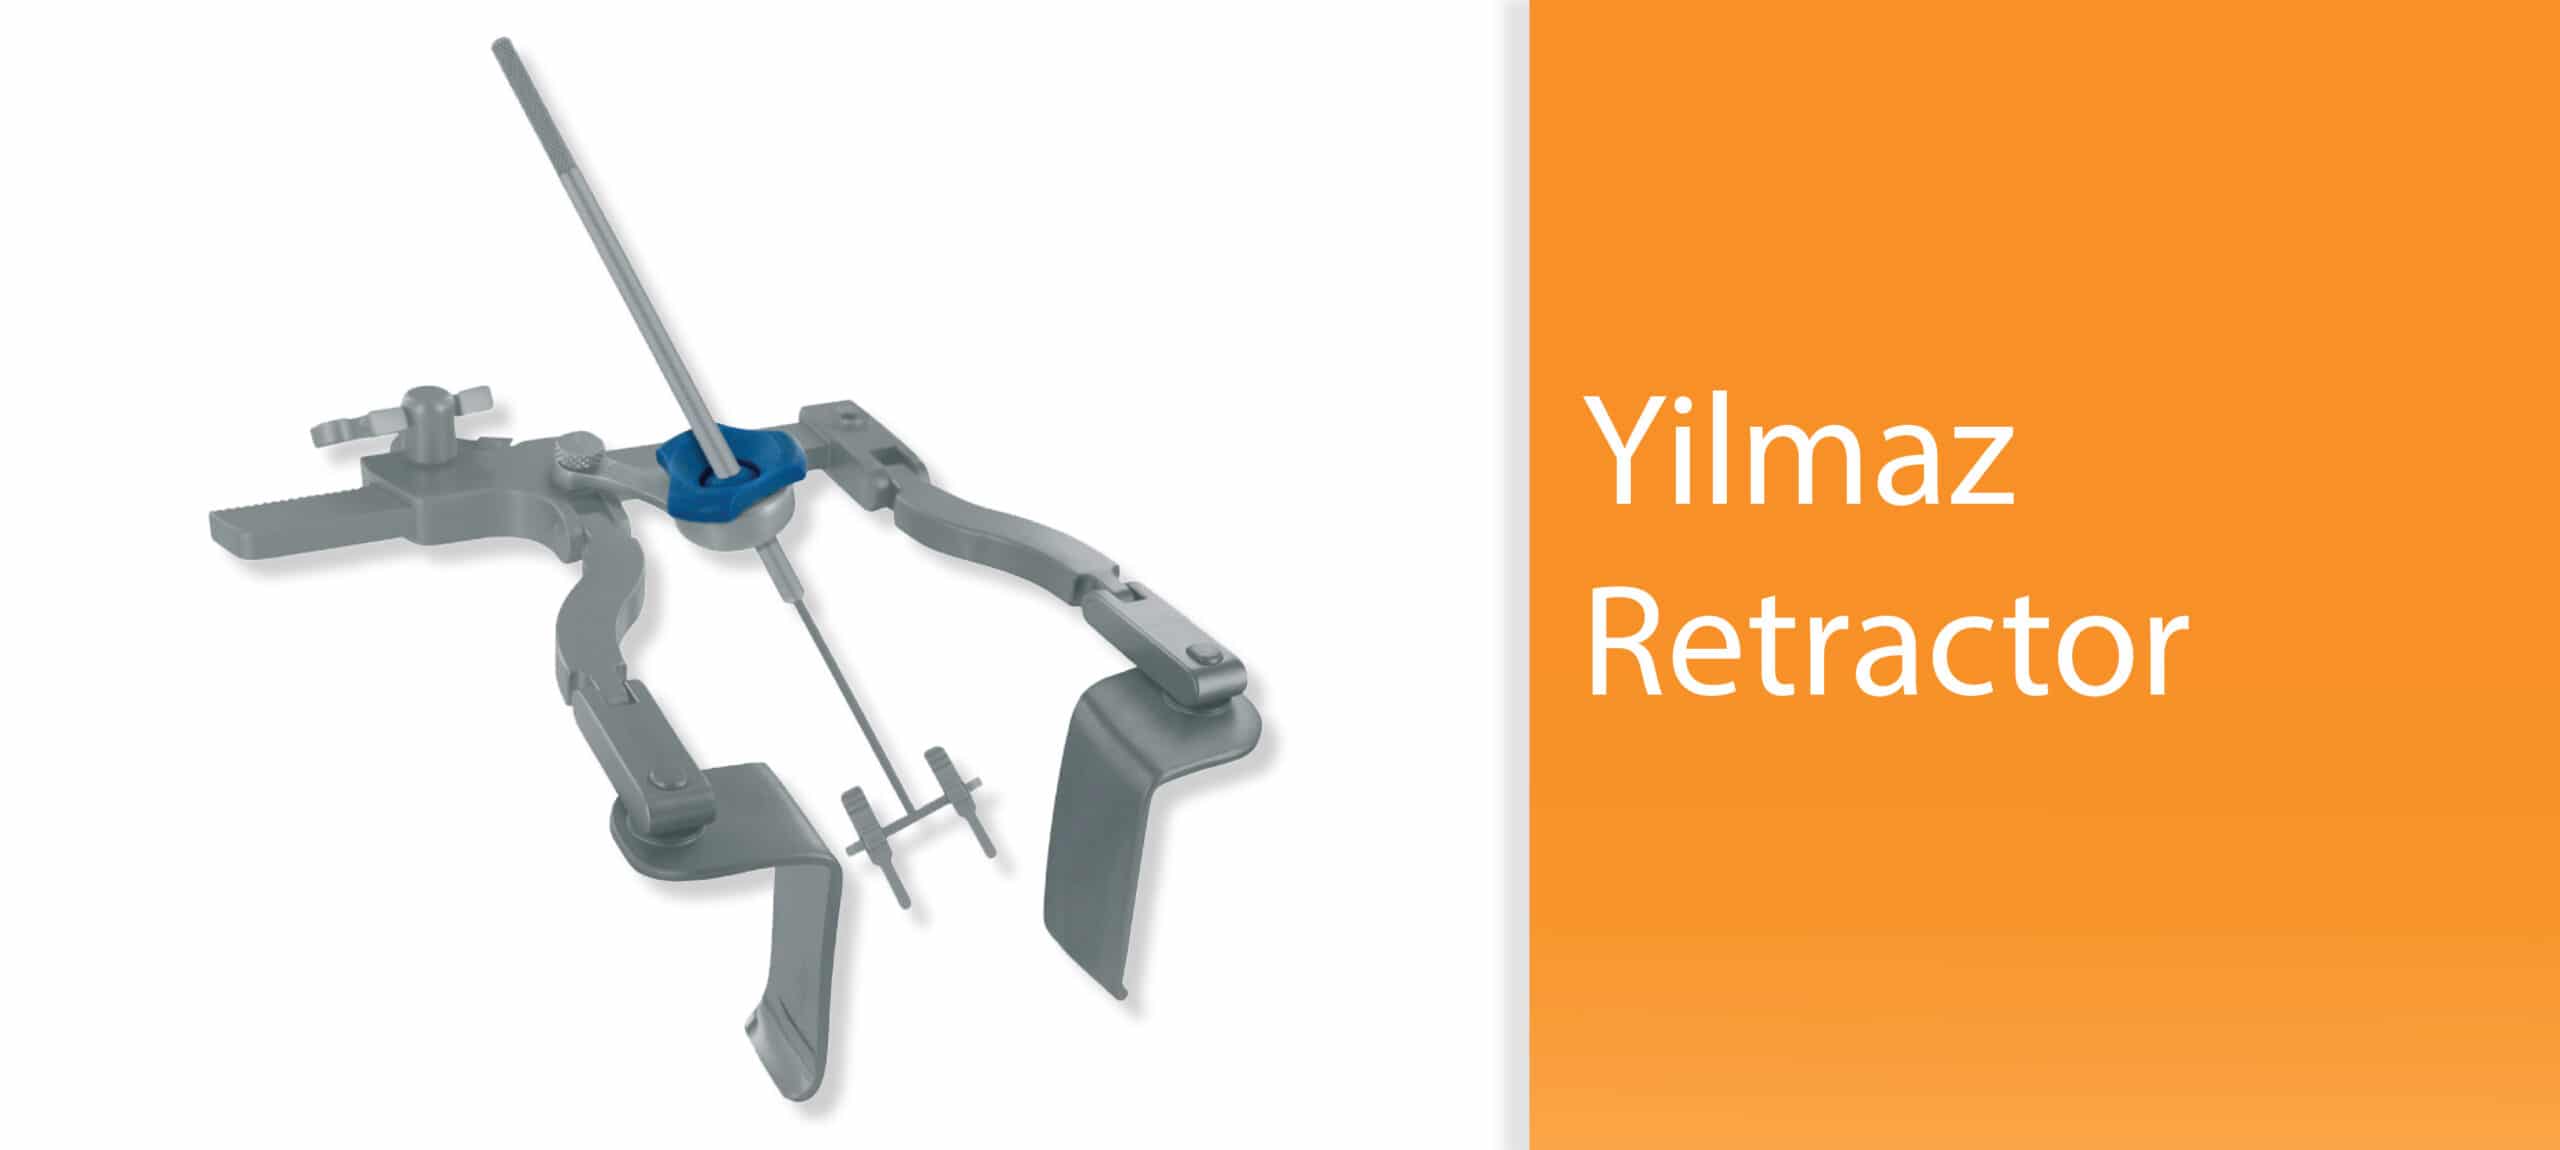 Yilmaz Retractor for minimally invasive CABG procedures